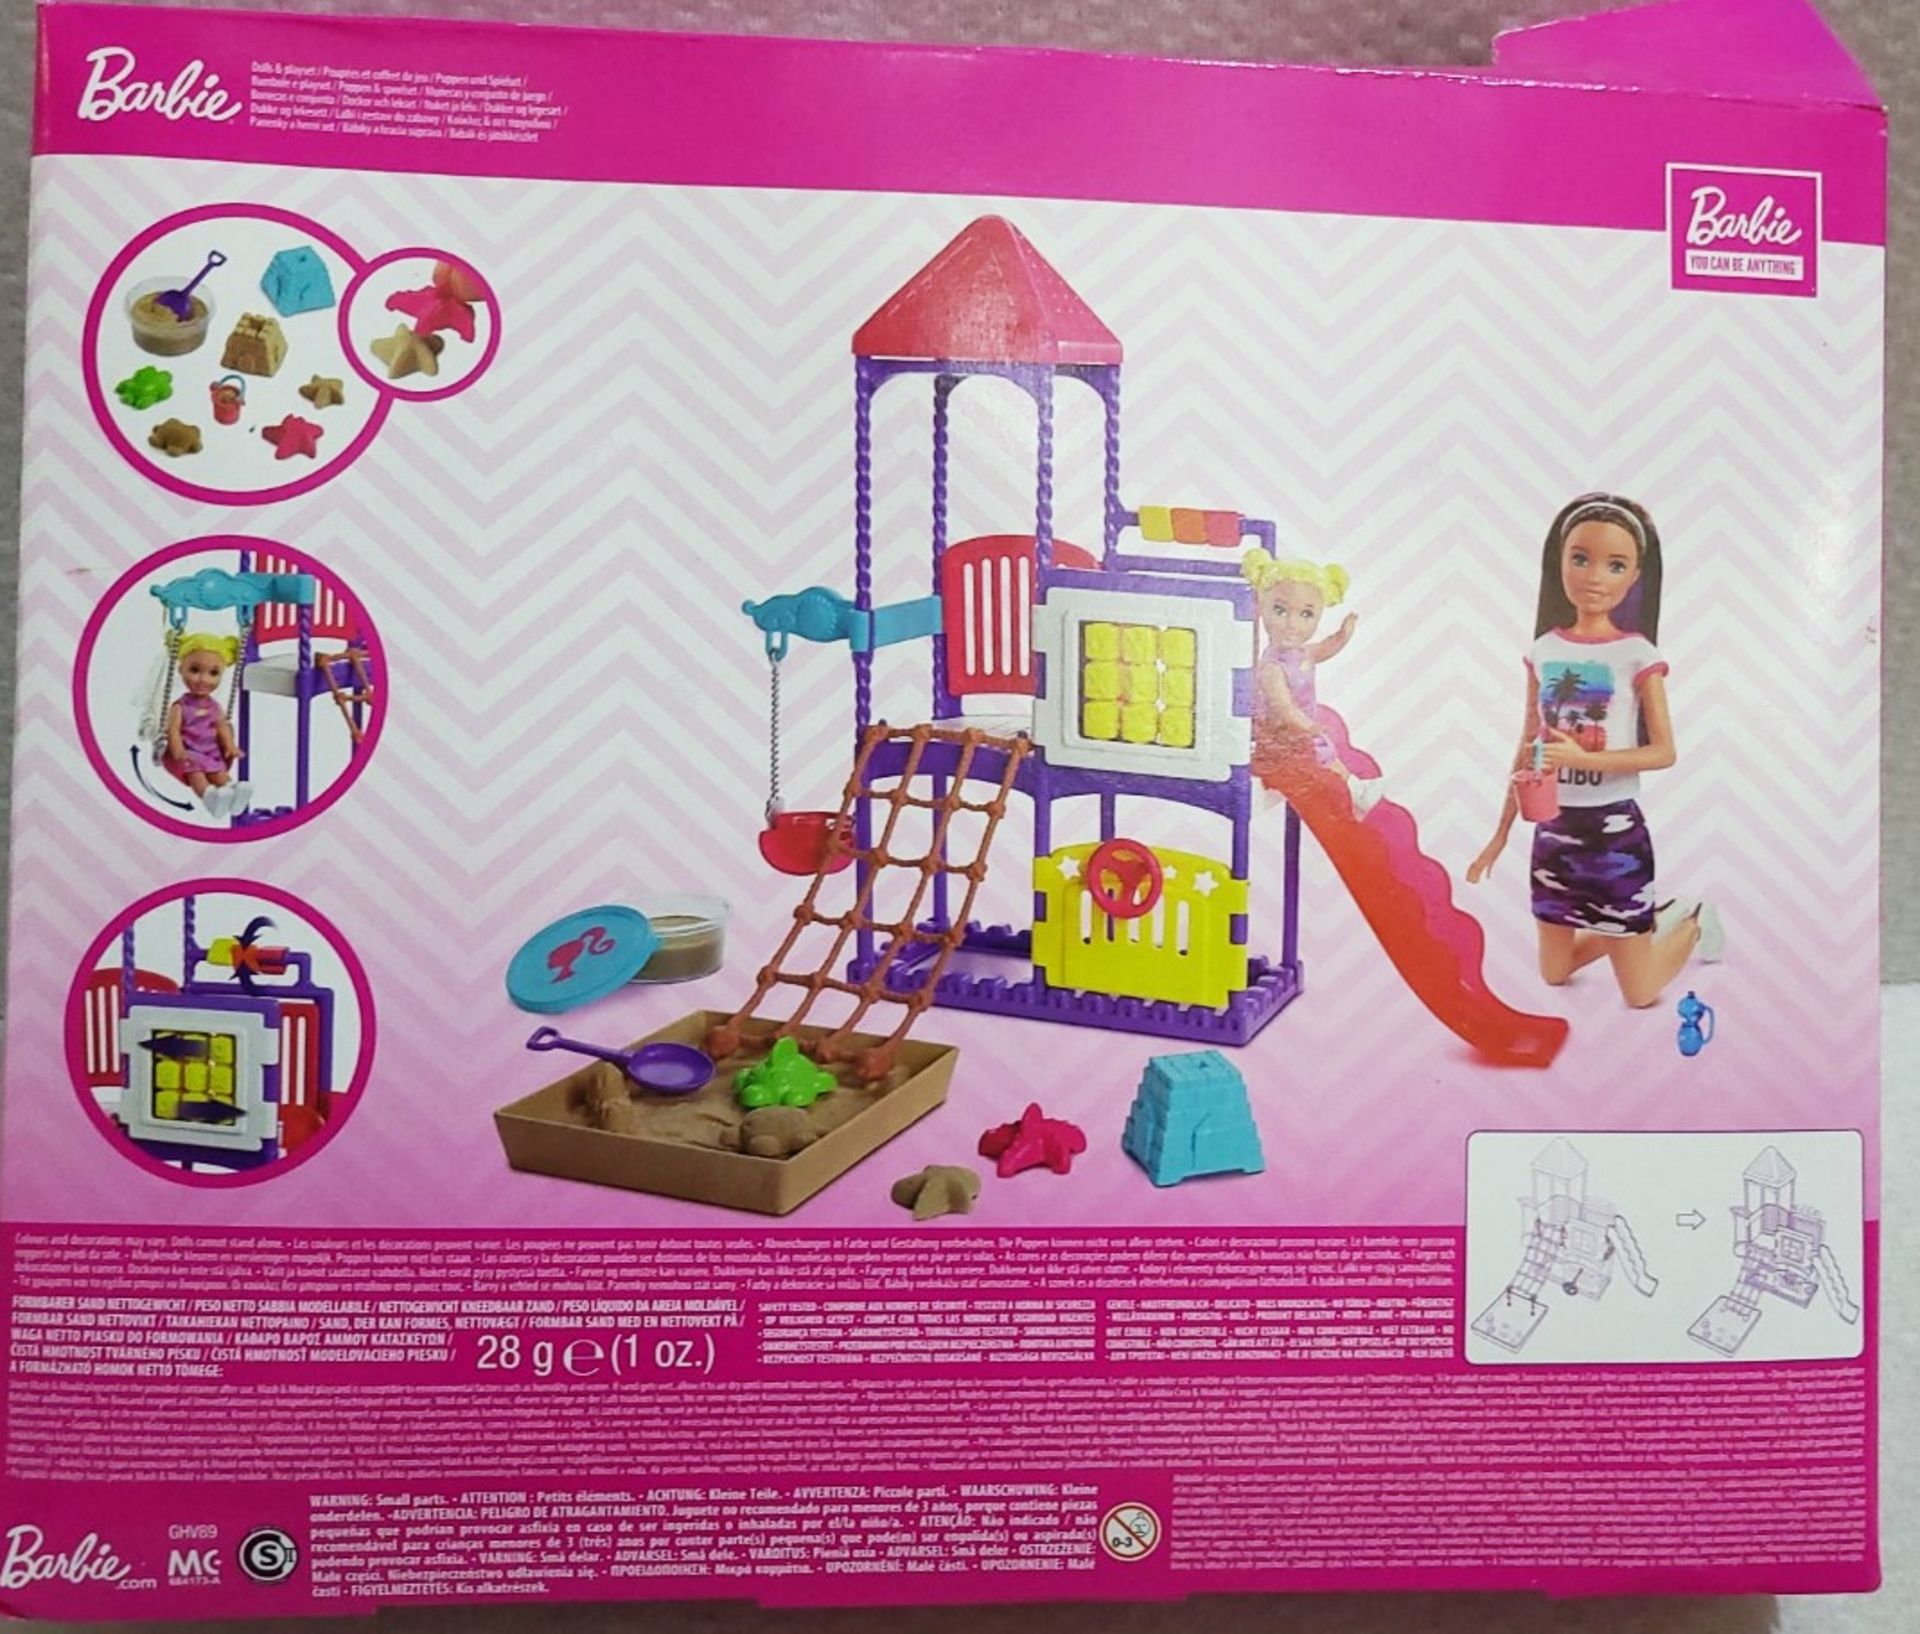 1 x MATTEL Barbie Skipper Babysitters Climb 'N' Explore Play Set & Barbie Extra #5 - Image 5 of 6